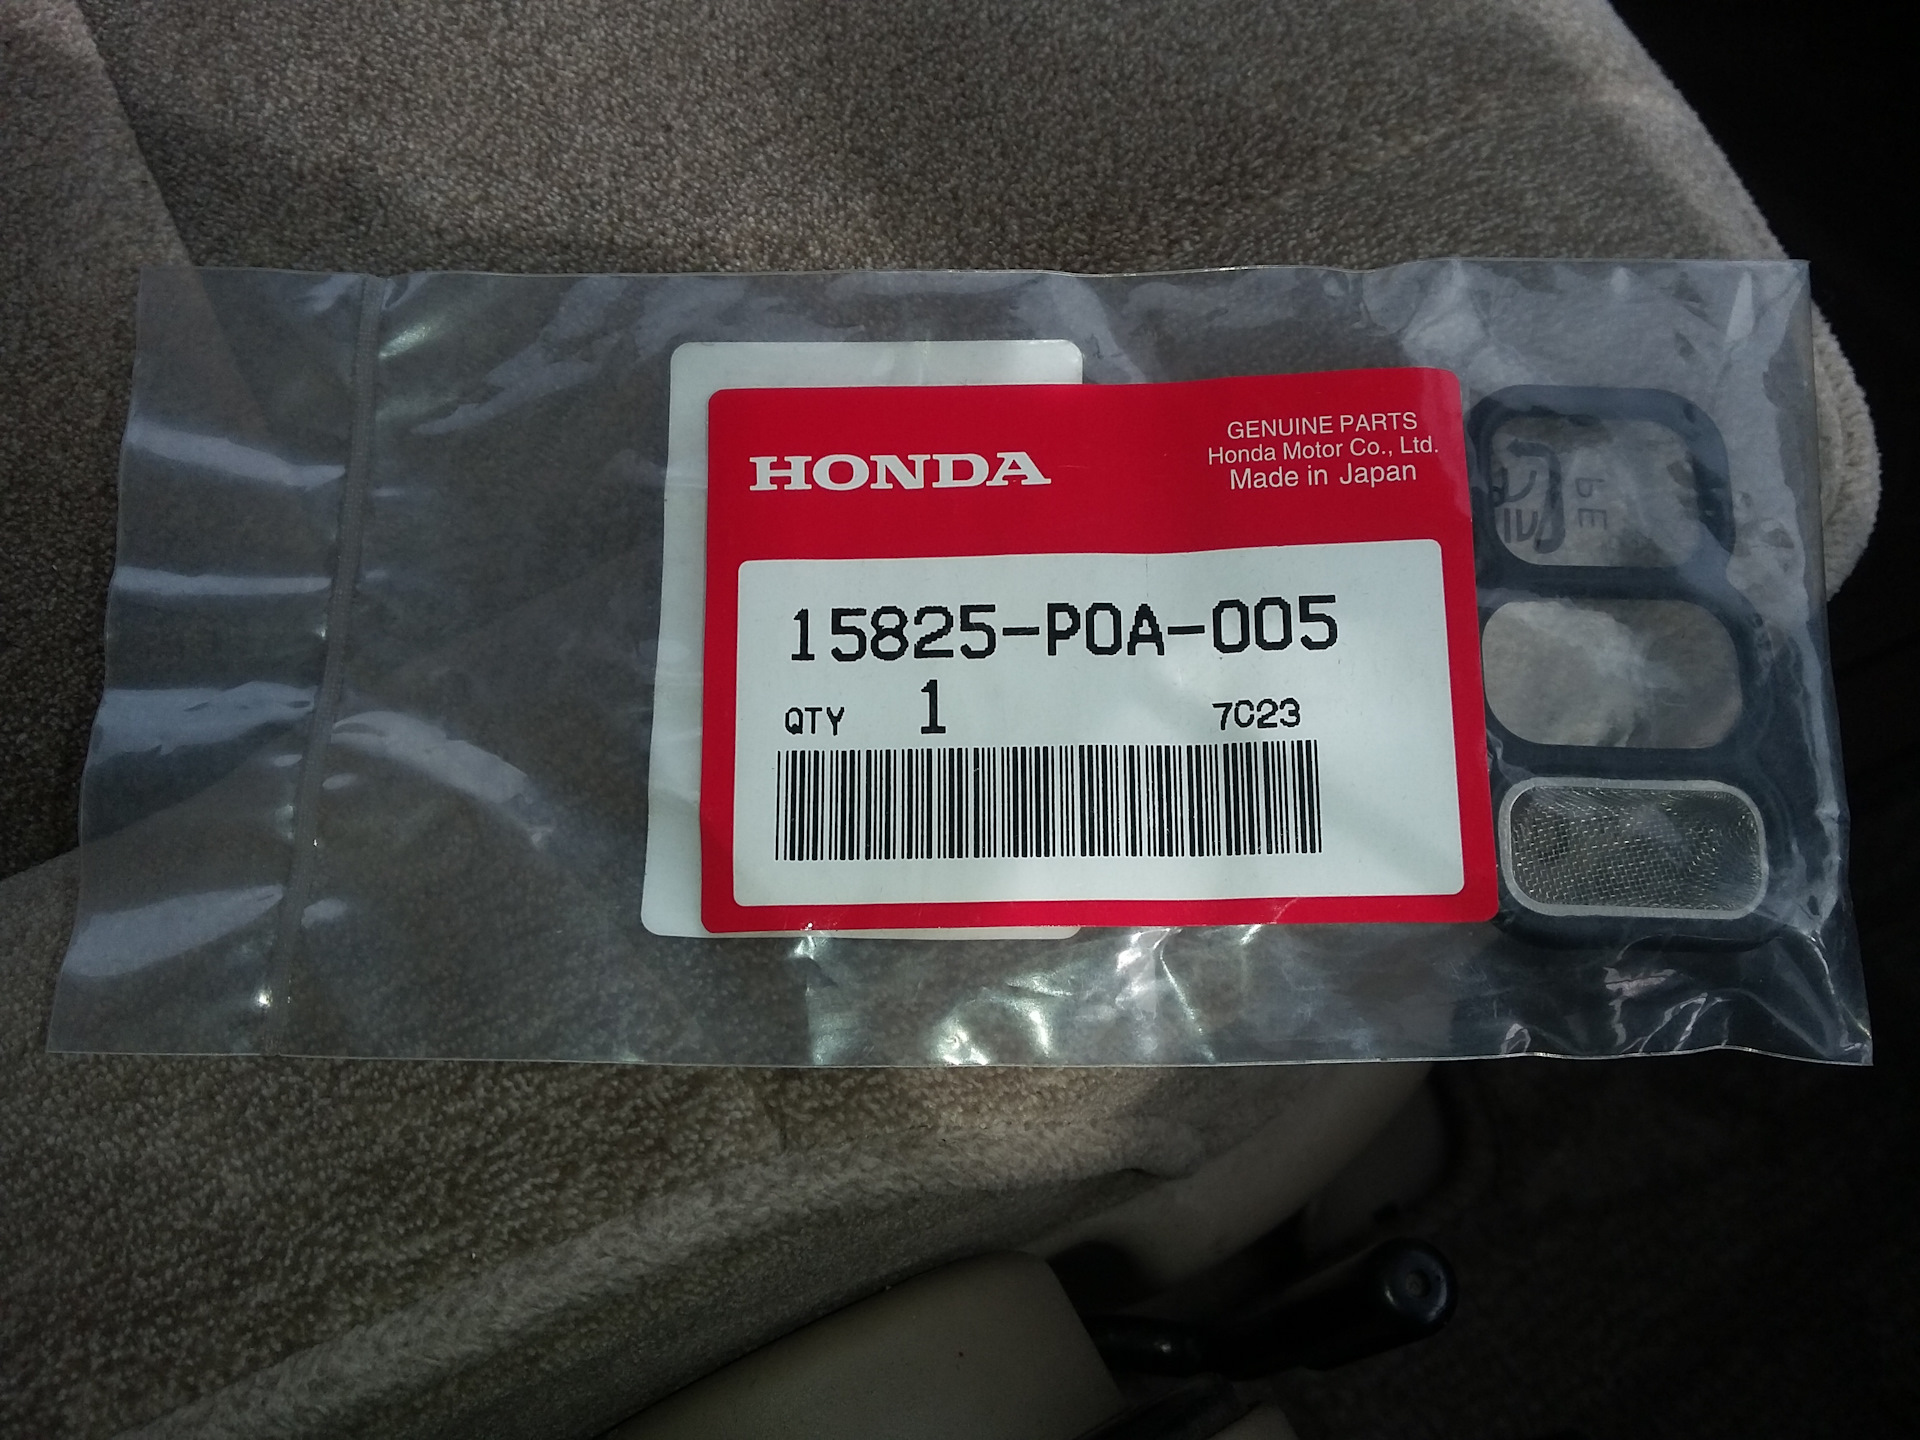 Honda v прокладки. Прокладка втек Хонда Одиссей. Прокладки VTEC Honda Odyssey. Прокладка клапана VTEC f23a. Honda f23a прокладка клапан VTEC.